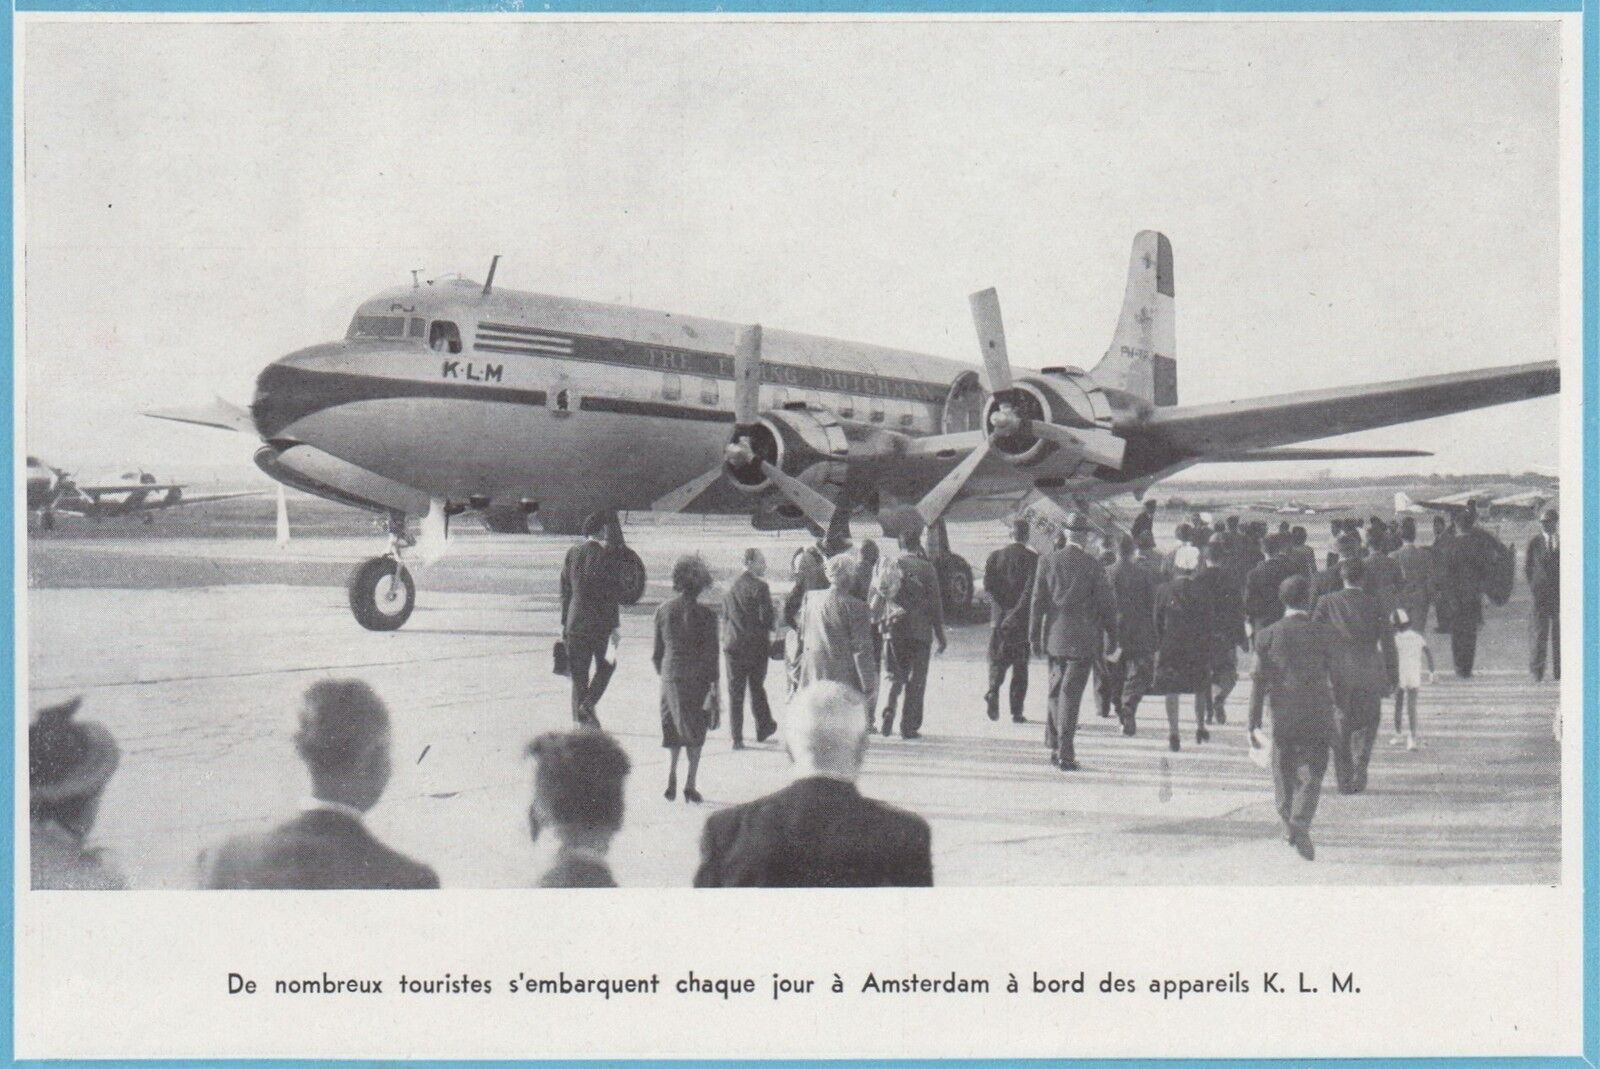 K.L.M. Advertising / KLM Cie Aerienne Airlines Vintage Photo ad 1949 - 4h